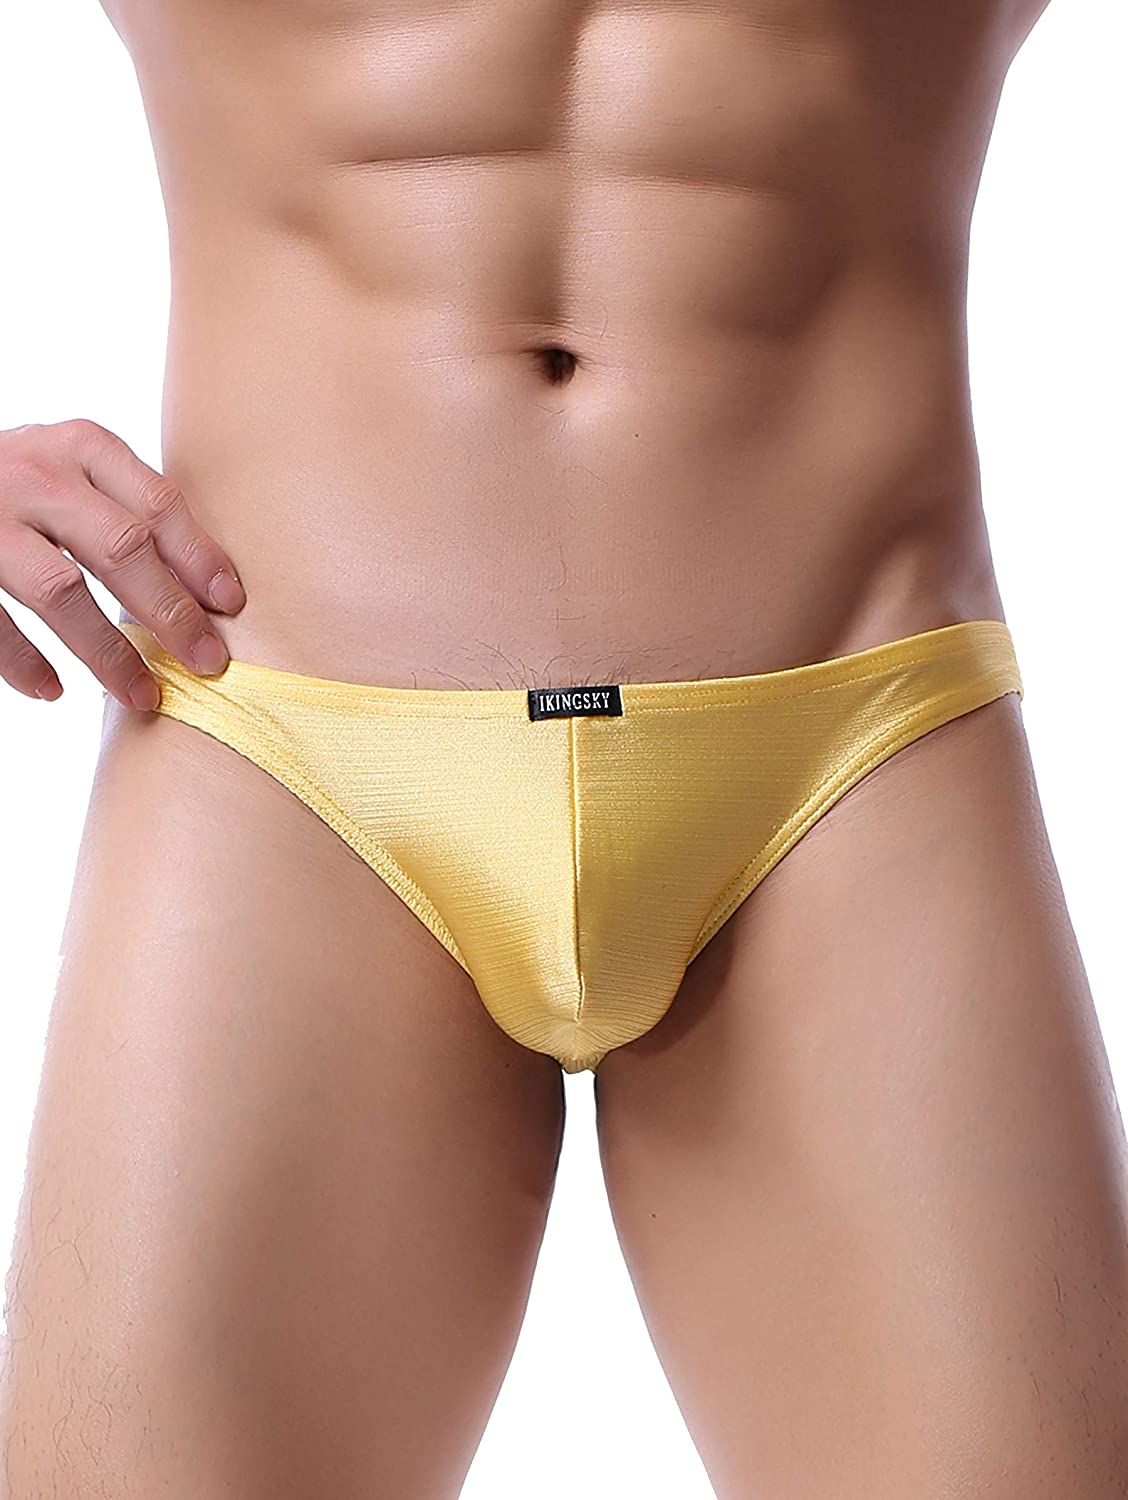 Ikingsky Mens Cheeky Underwear Mens Pouch Bikini Panties Sexy Branzilian Back B Ebay